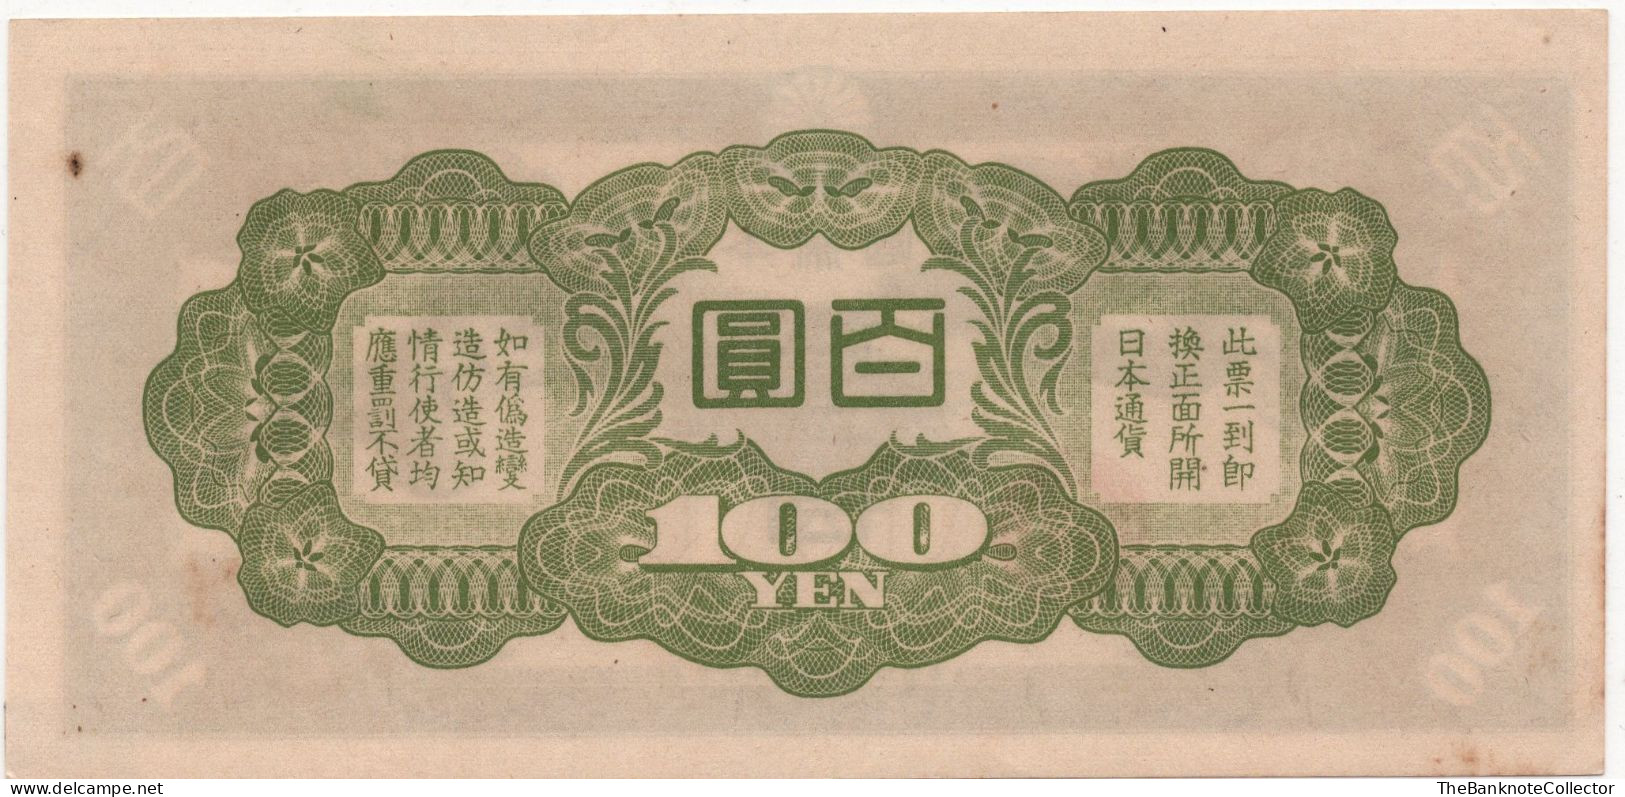 China 100 Yen ND 1945 WWII Japanese Military P-M21  UNC - China